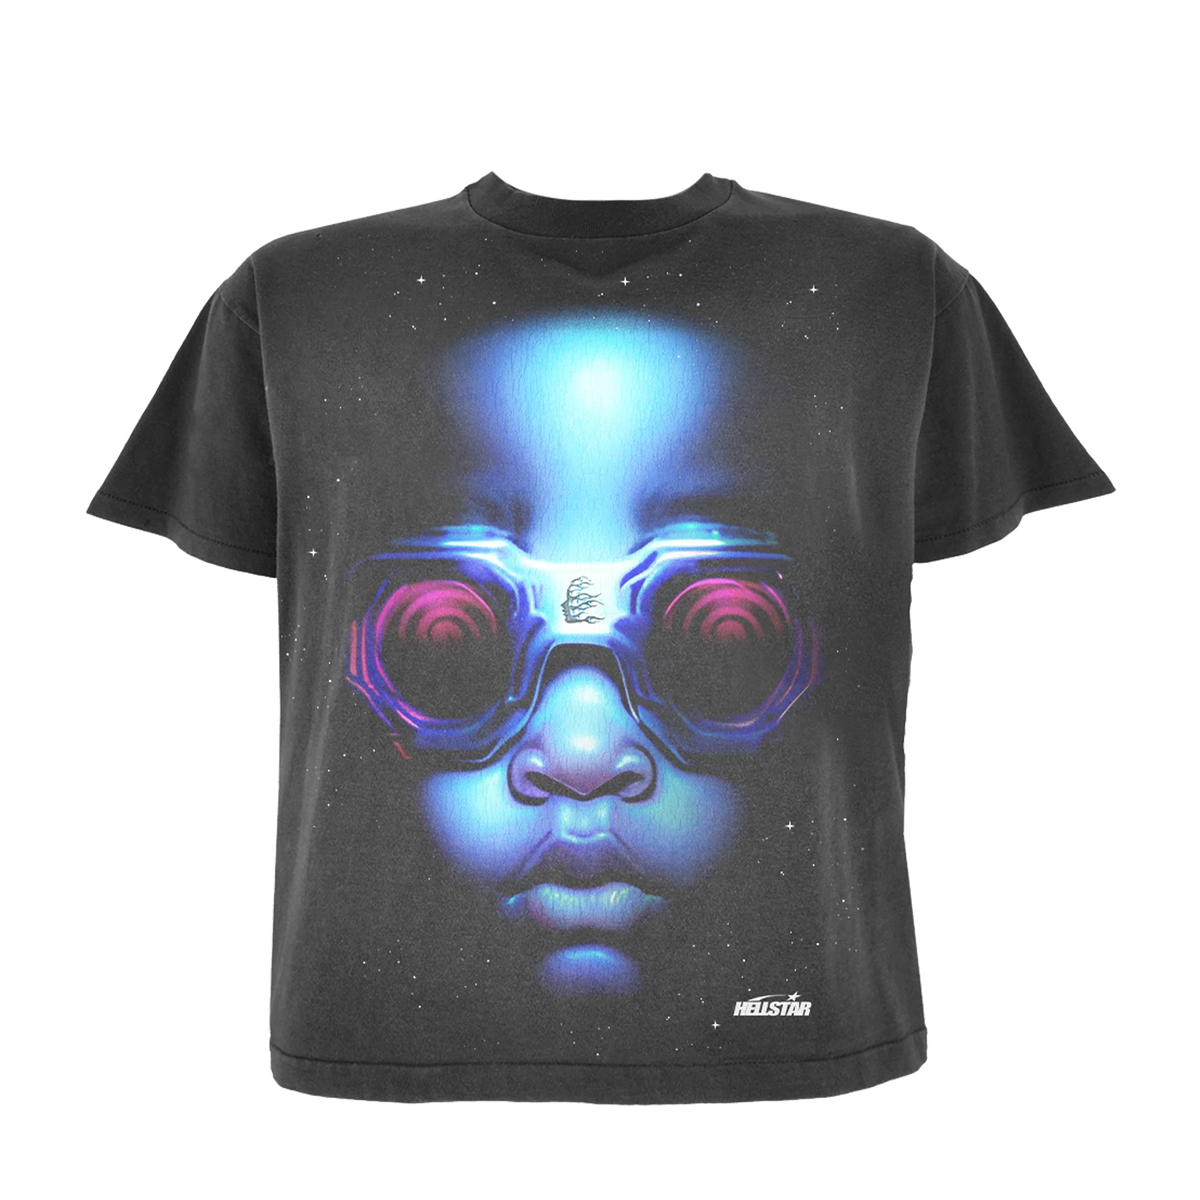 Hellstar 'Goggles' T-Shirt Black